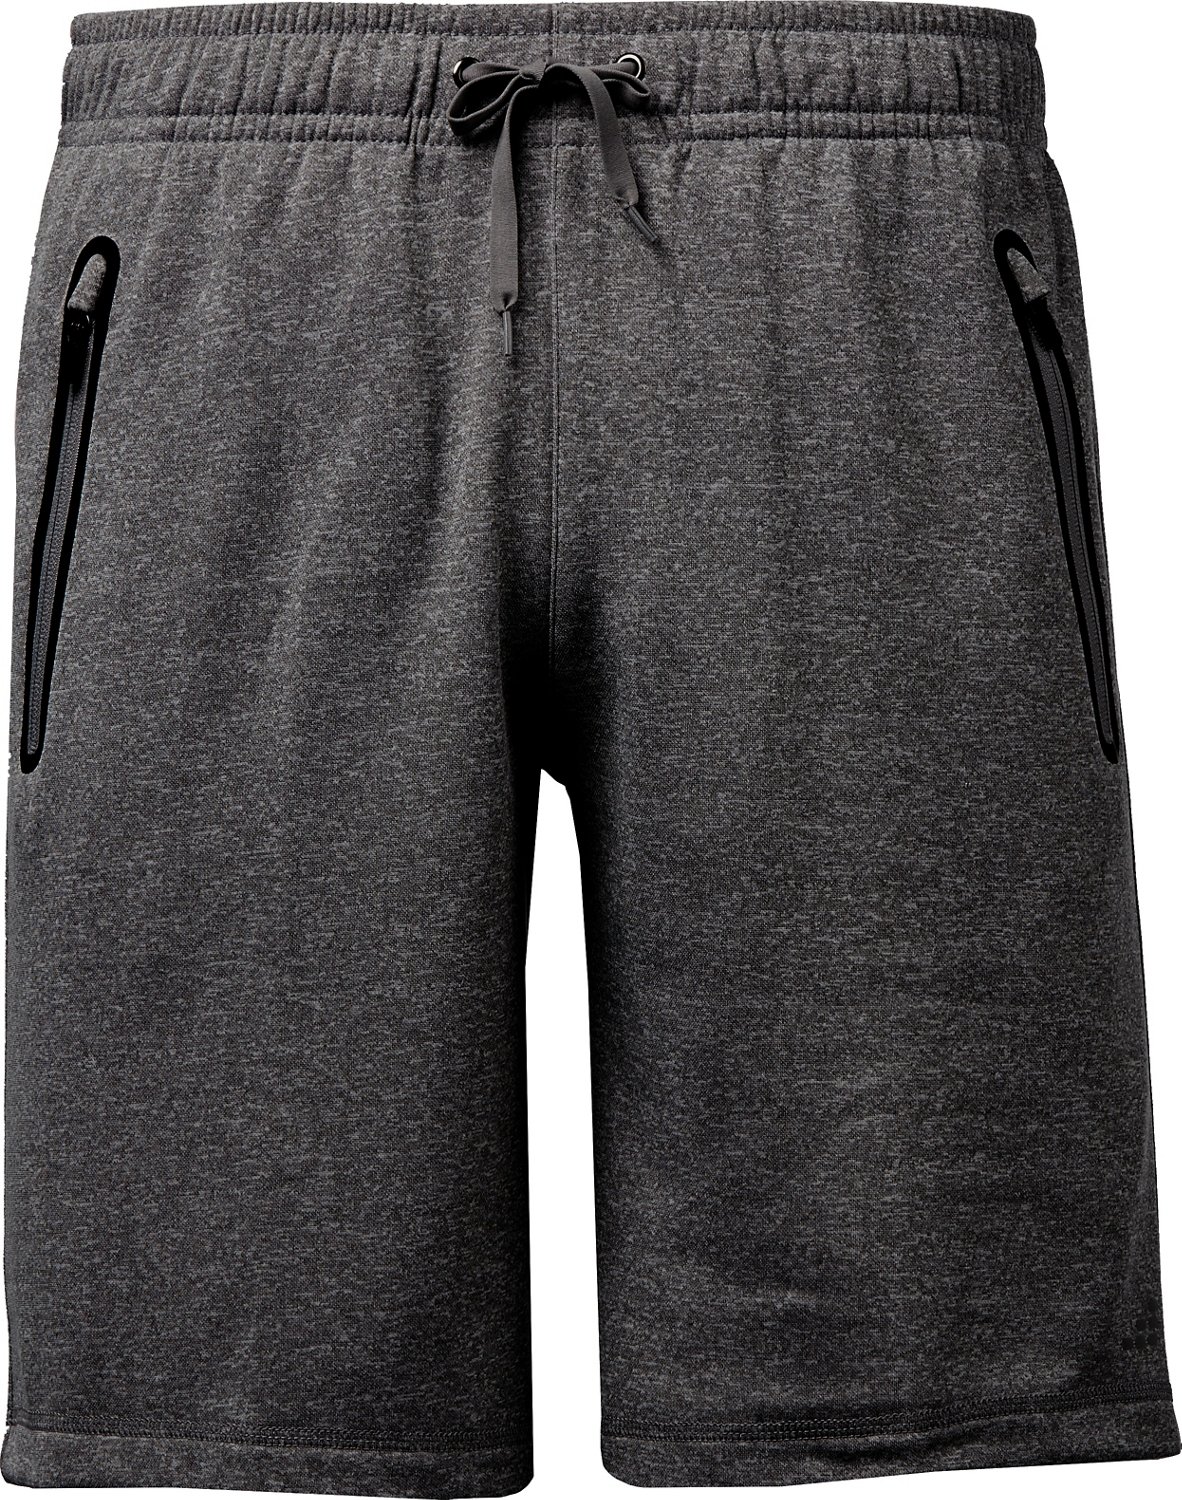 BCG Men's Athletic Lifestyle Shorts | Academy